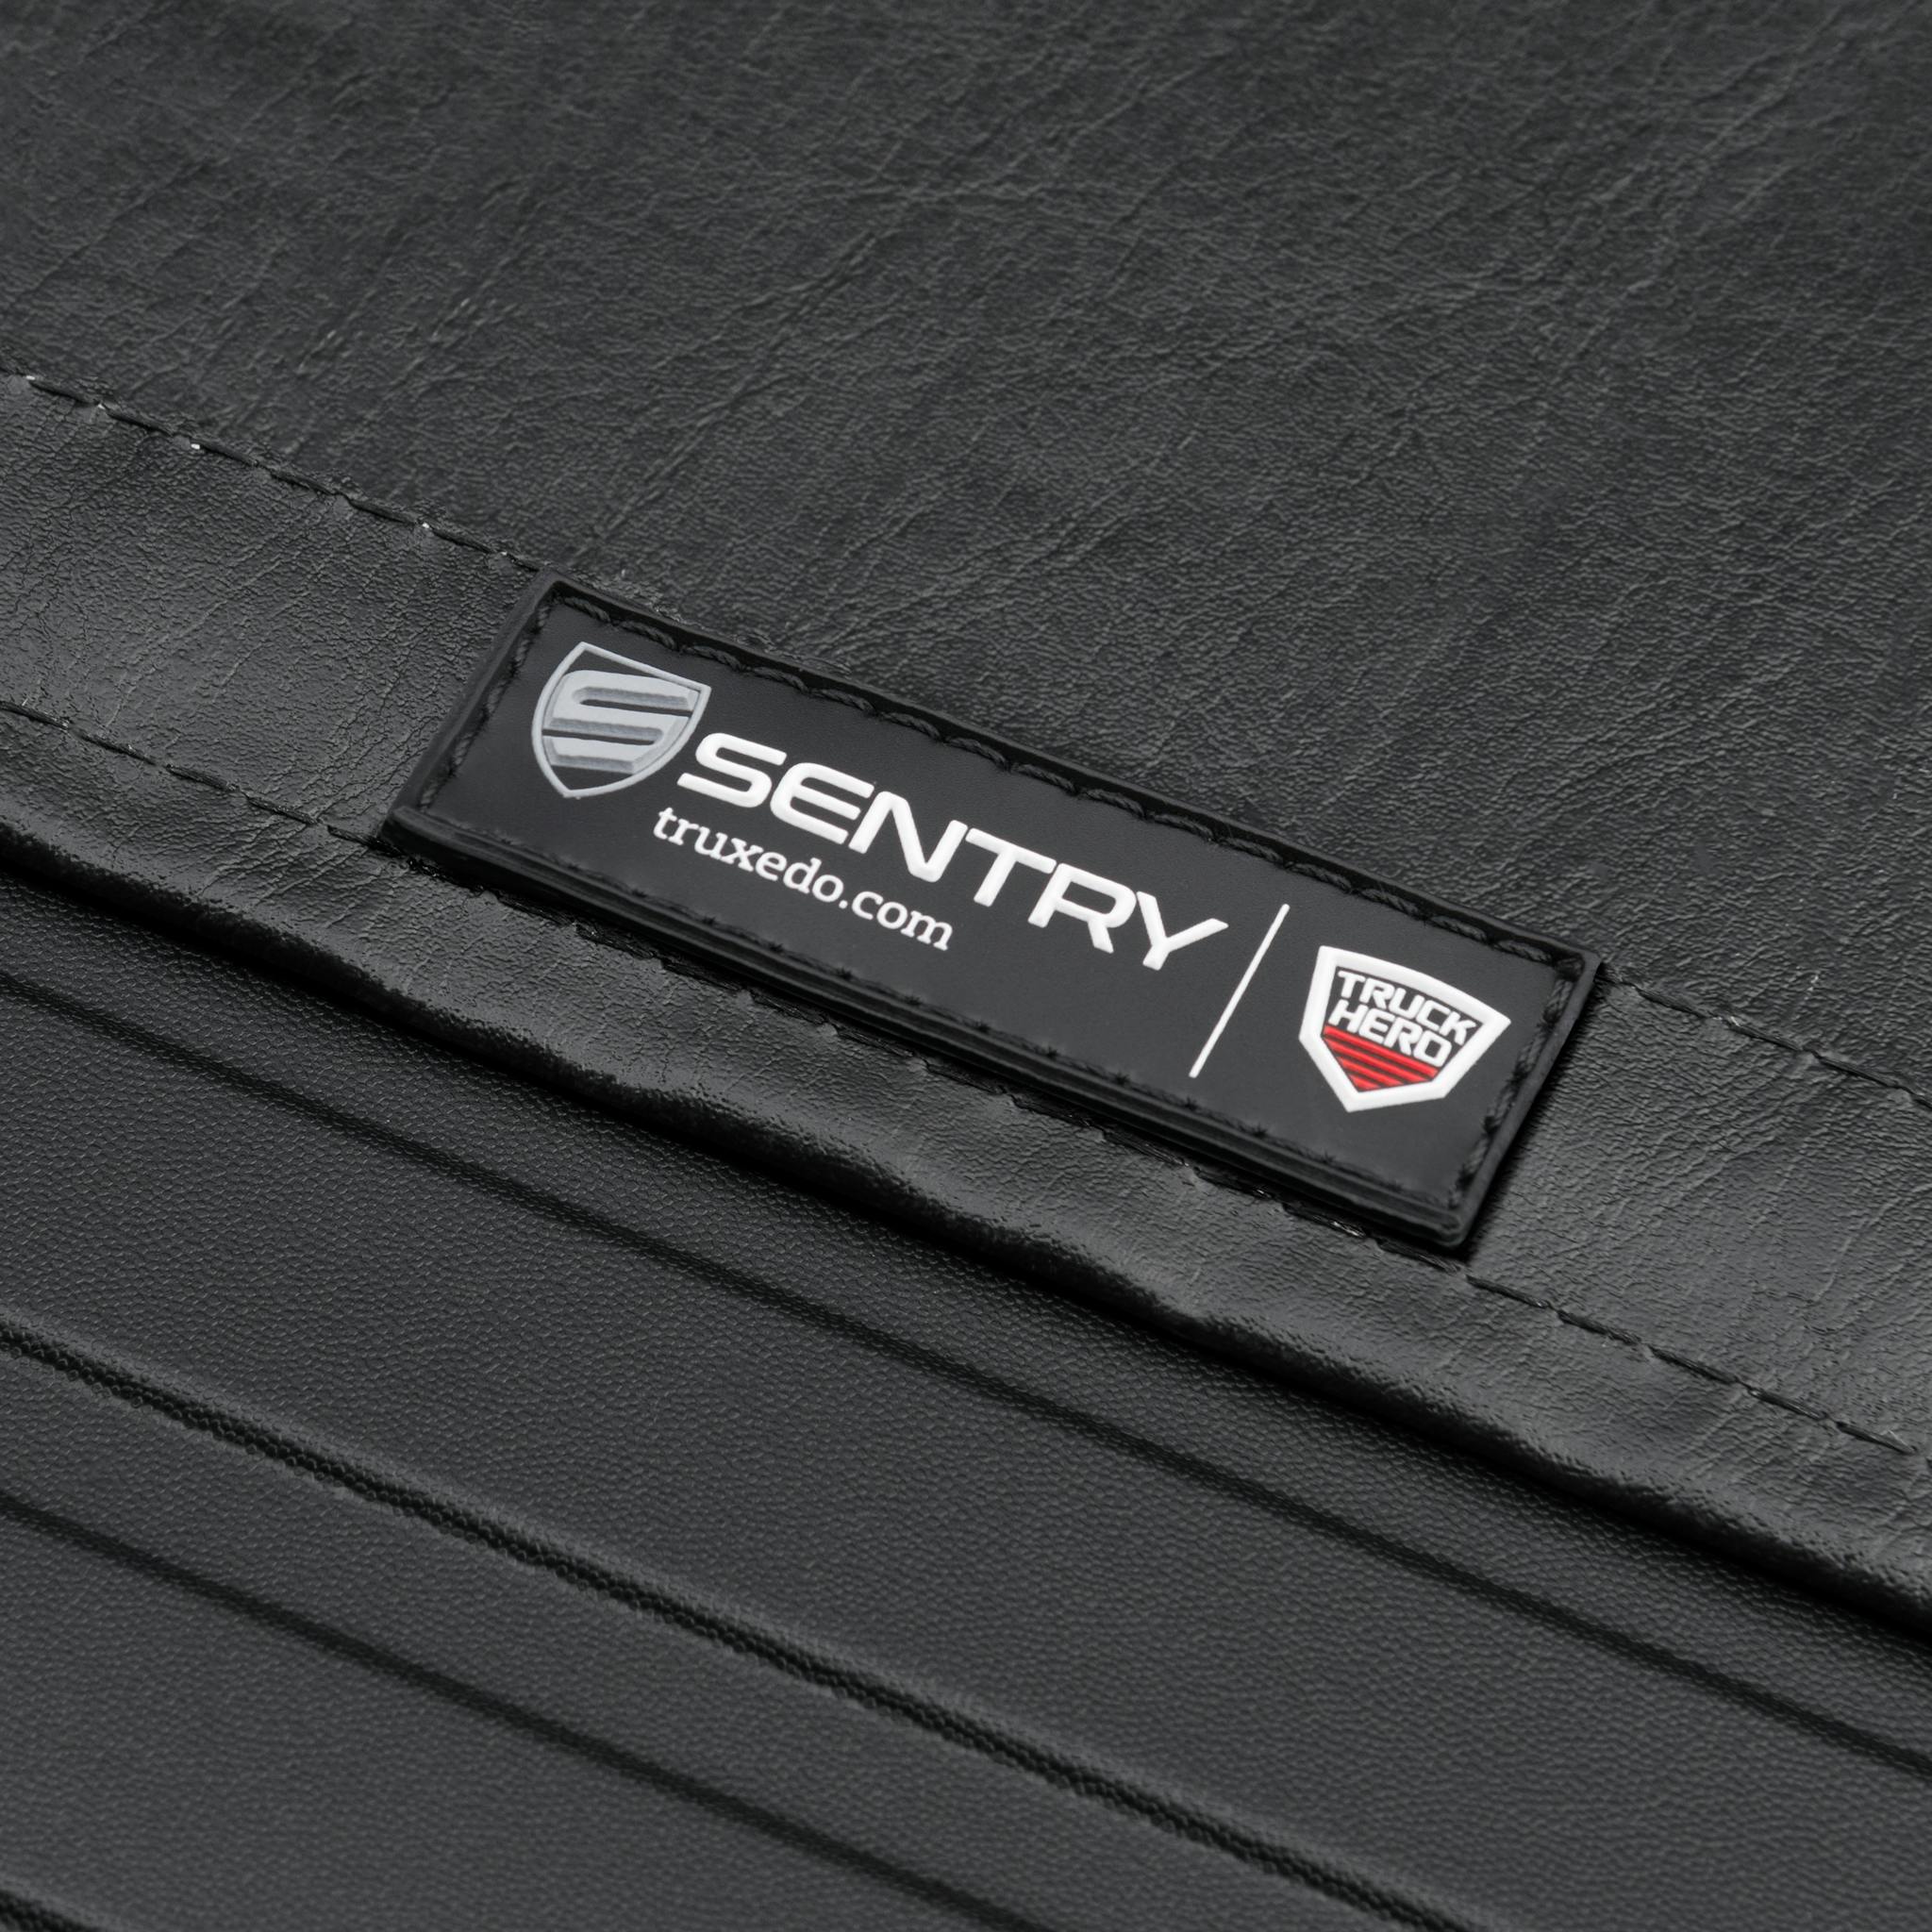 Sentry Tonneau Bed Cover Top View Logo